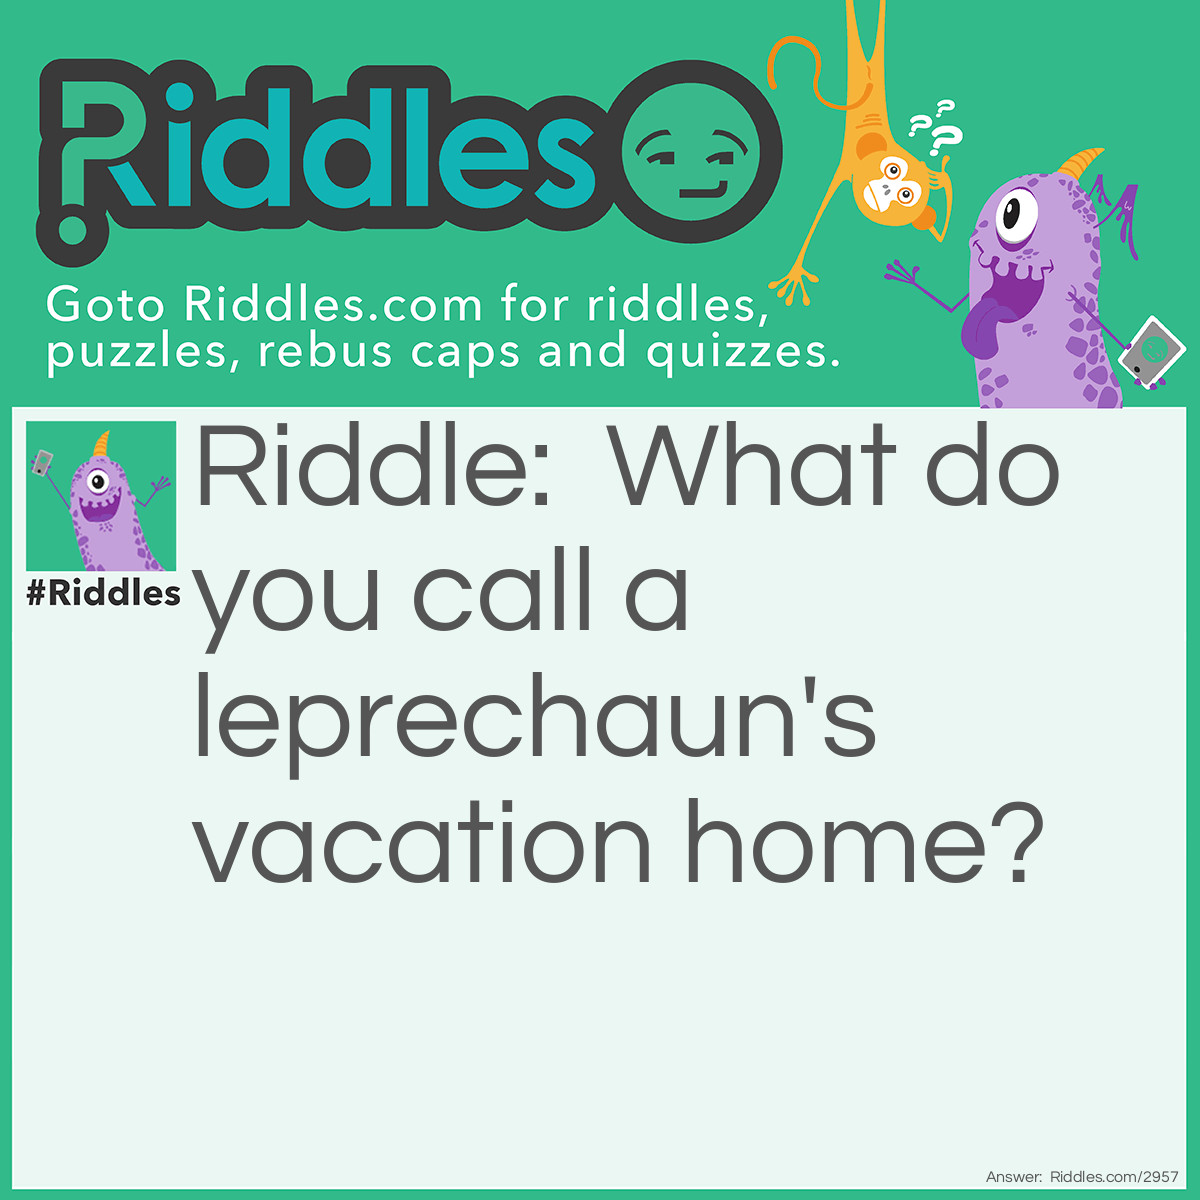 Riddle: What do you call a leprechaun's vacation home? Answer: A Lepre-condo.